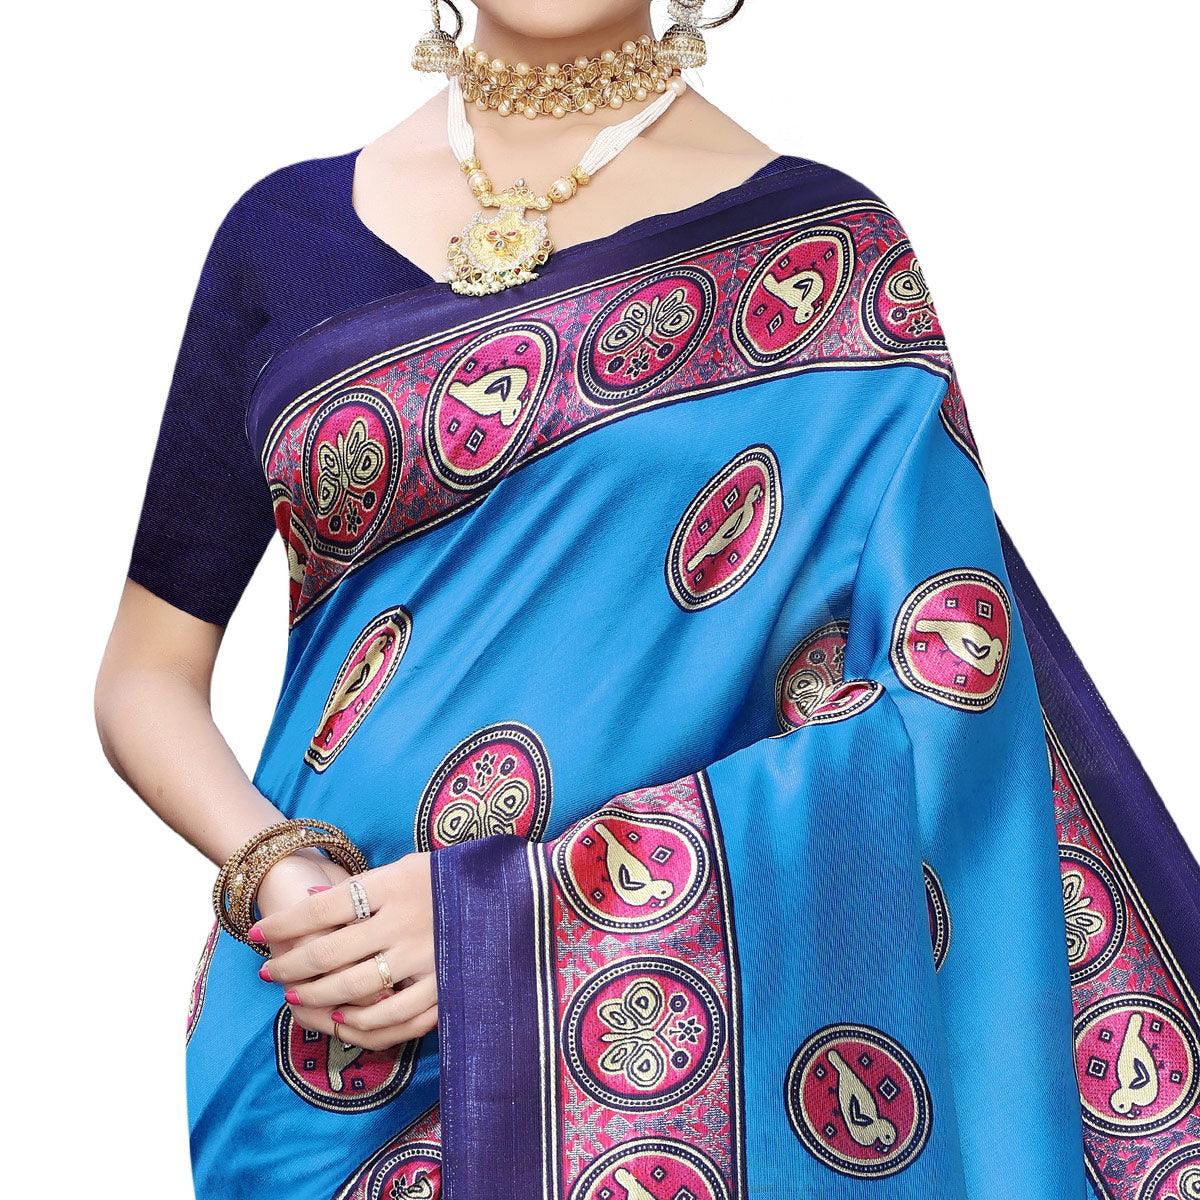 Imposing Sky Blue Colored Casual Wear Printed Art Silk Saree - Peachmode